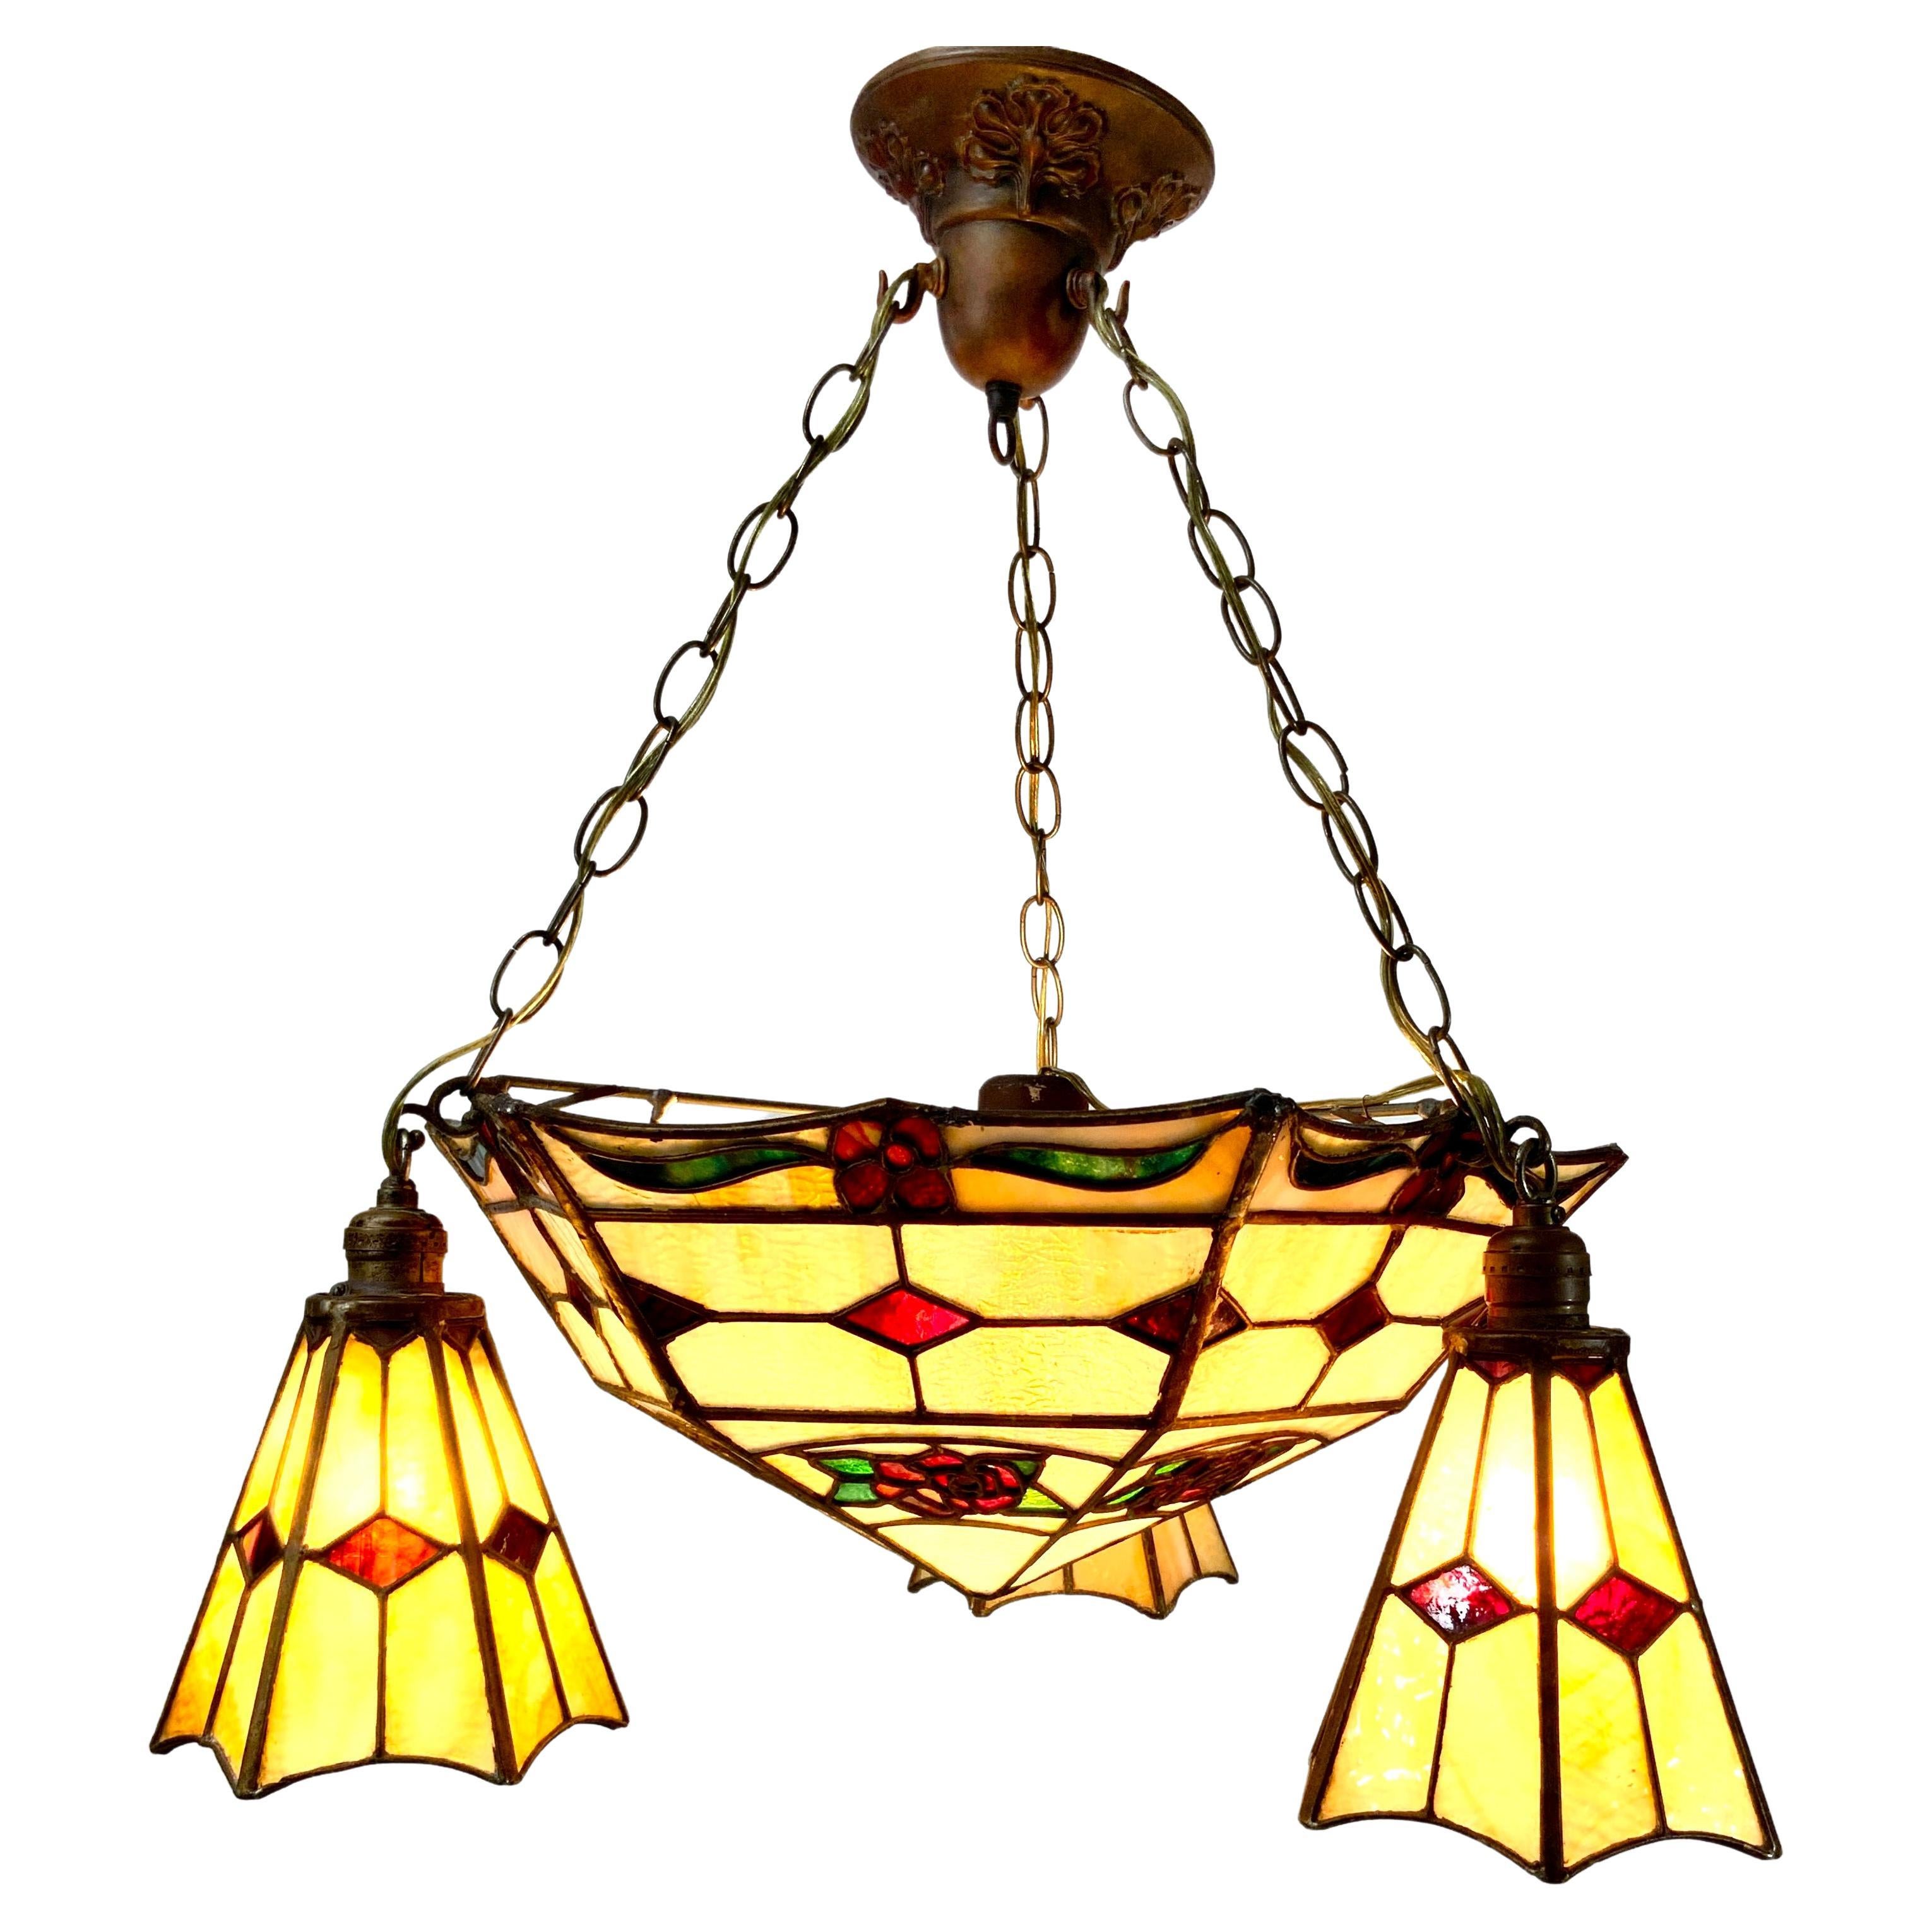 Art Nouveau Stained Glass Pendant Chandelier with Art Deco Influences For Sale